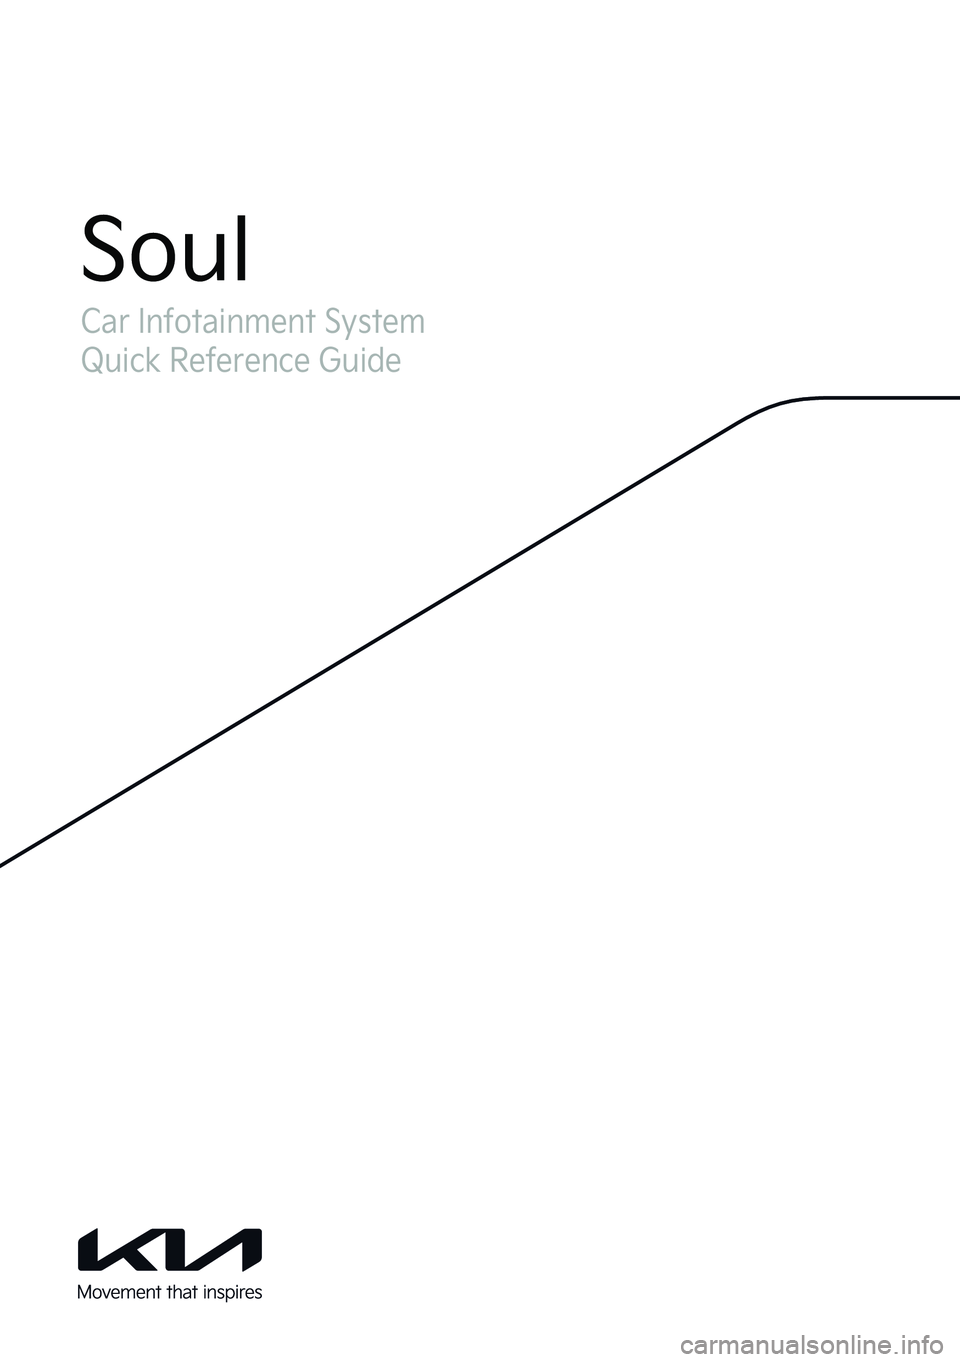 KIA SOUL 2022  Navigation System Quick Reference Guide Car Infotainment System
Quick Reference Guide
Soul  